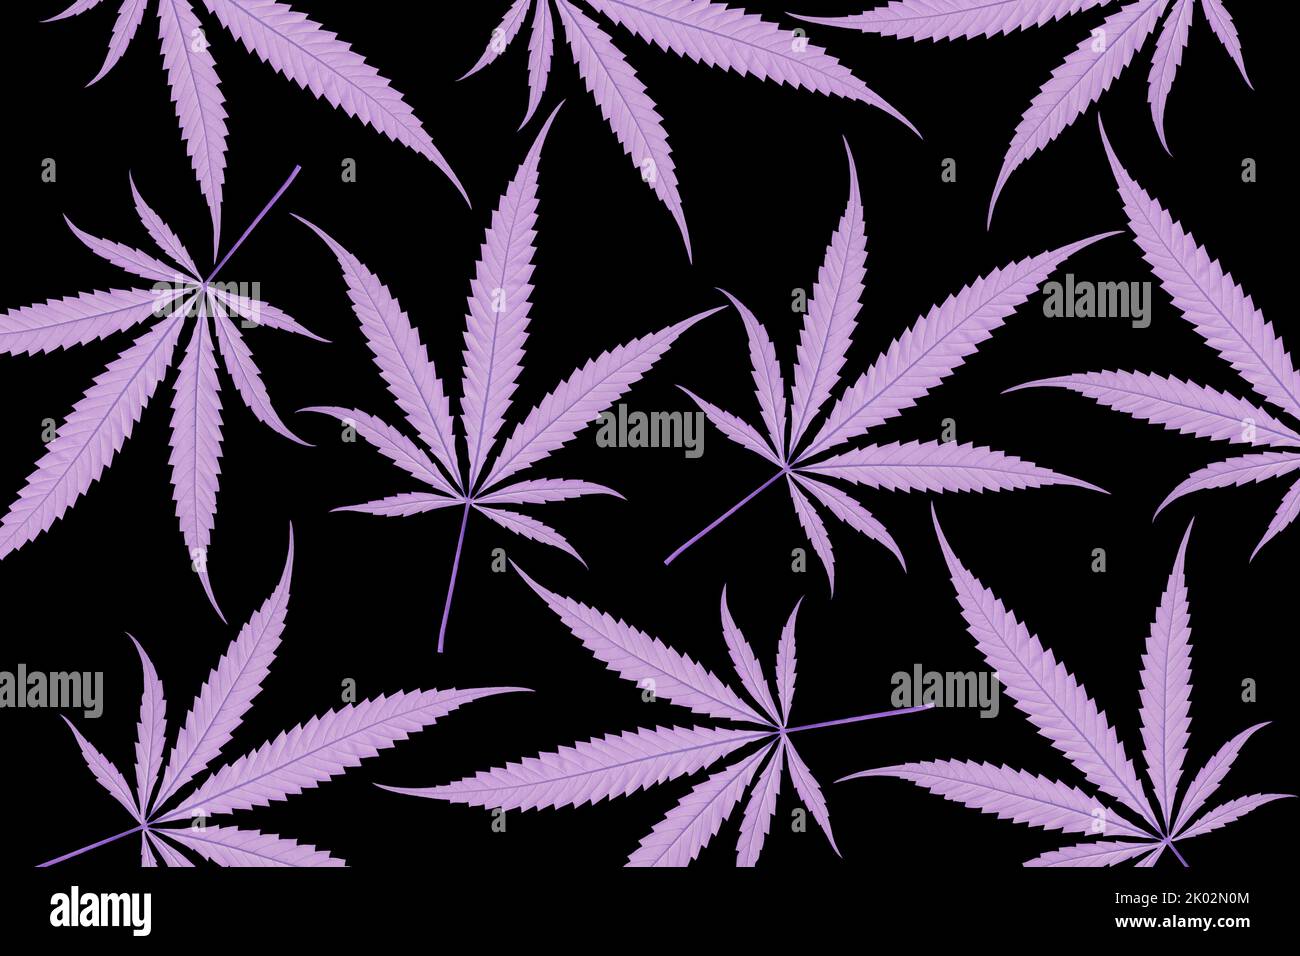 Pattern of purple hemp leaves on black background Stock Photo